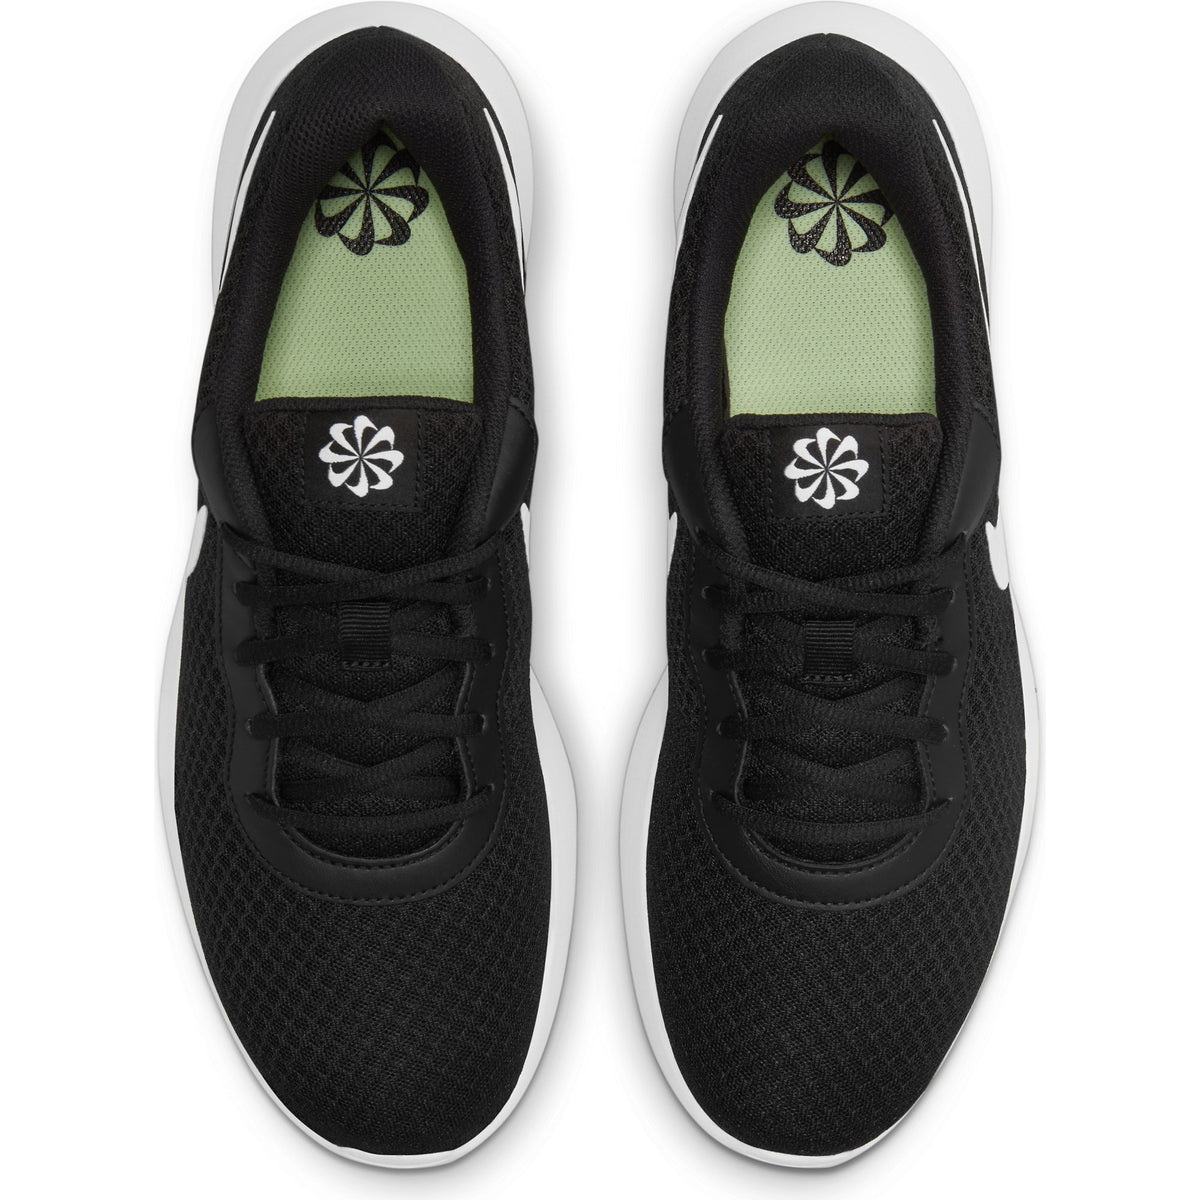 Zapatilla Nike Tanjun de Hombre color Negro / Blanco